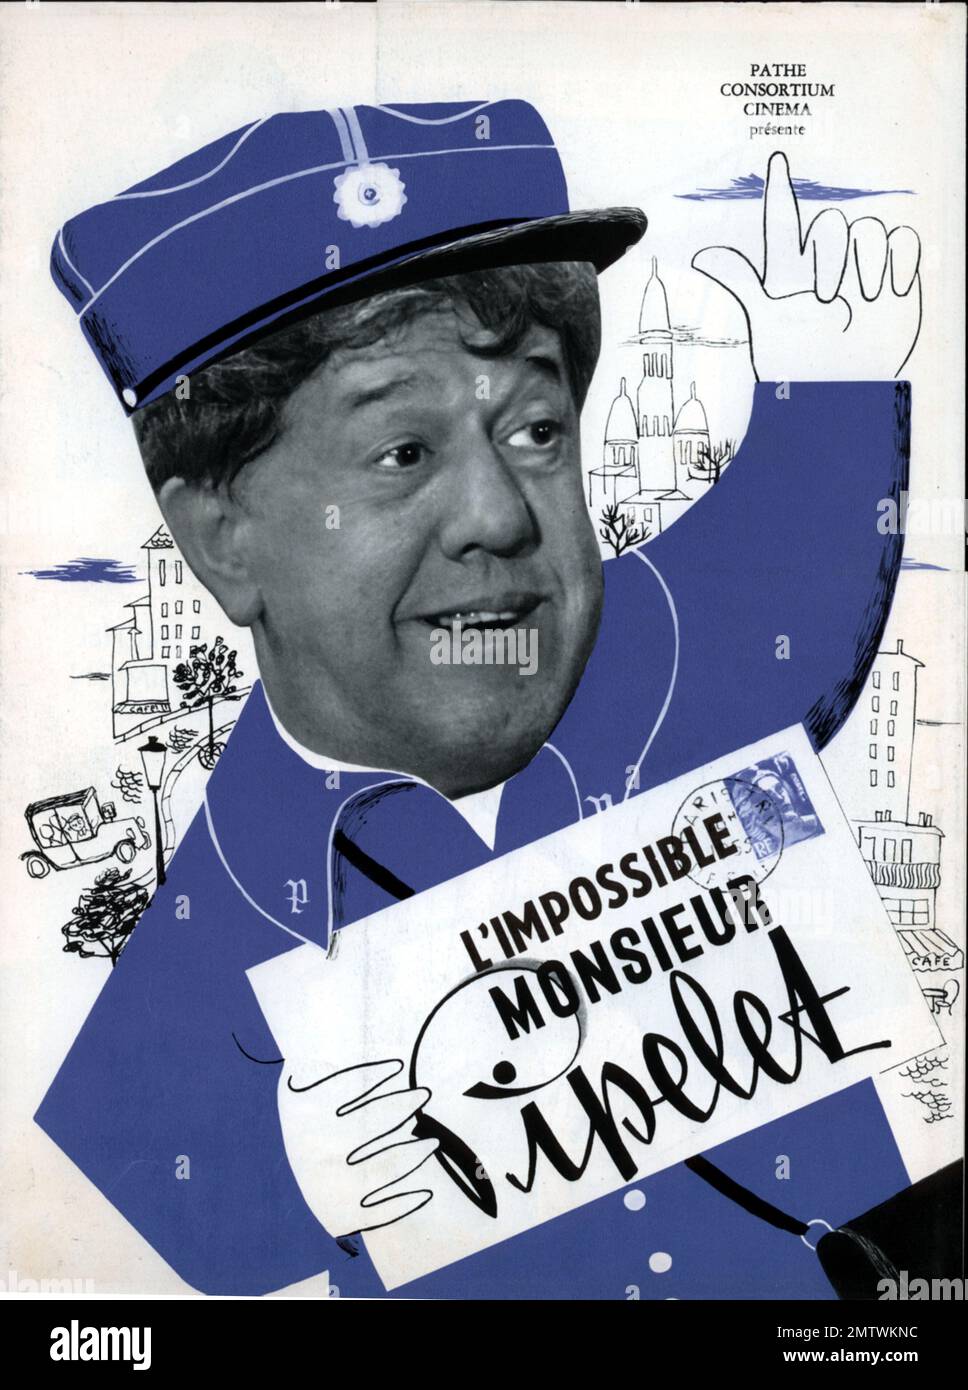 L'Impossible Monsieur Pipelet anno: 1955 - Francia Michel Simon, Direttore: André Hunebelle poster francese Foto Stock